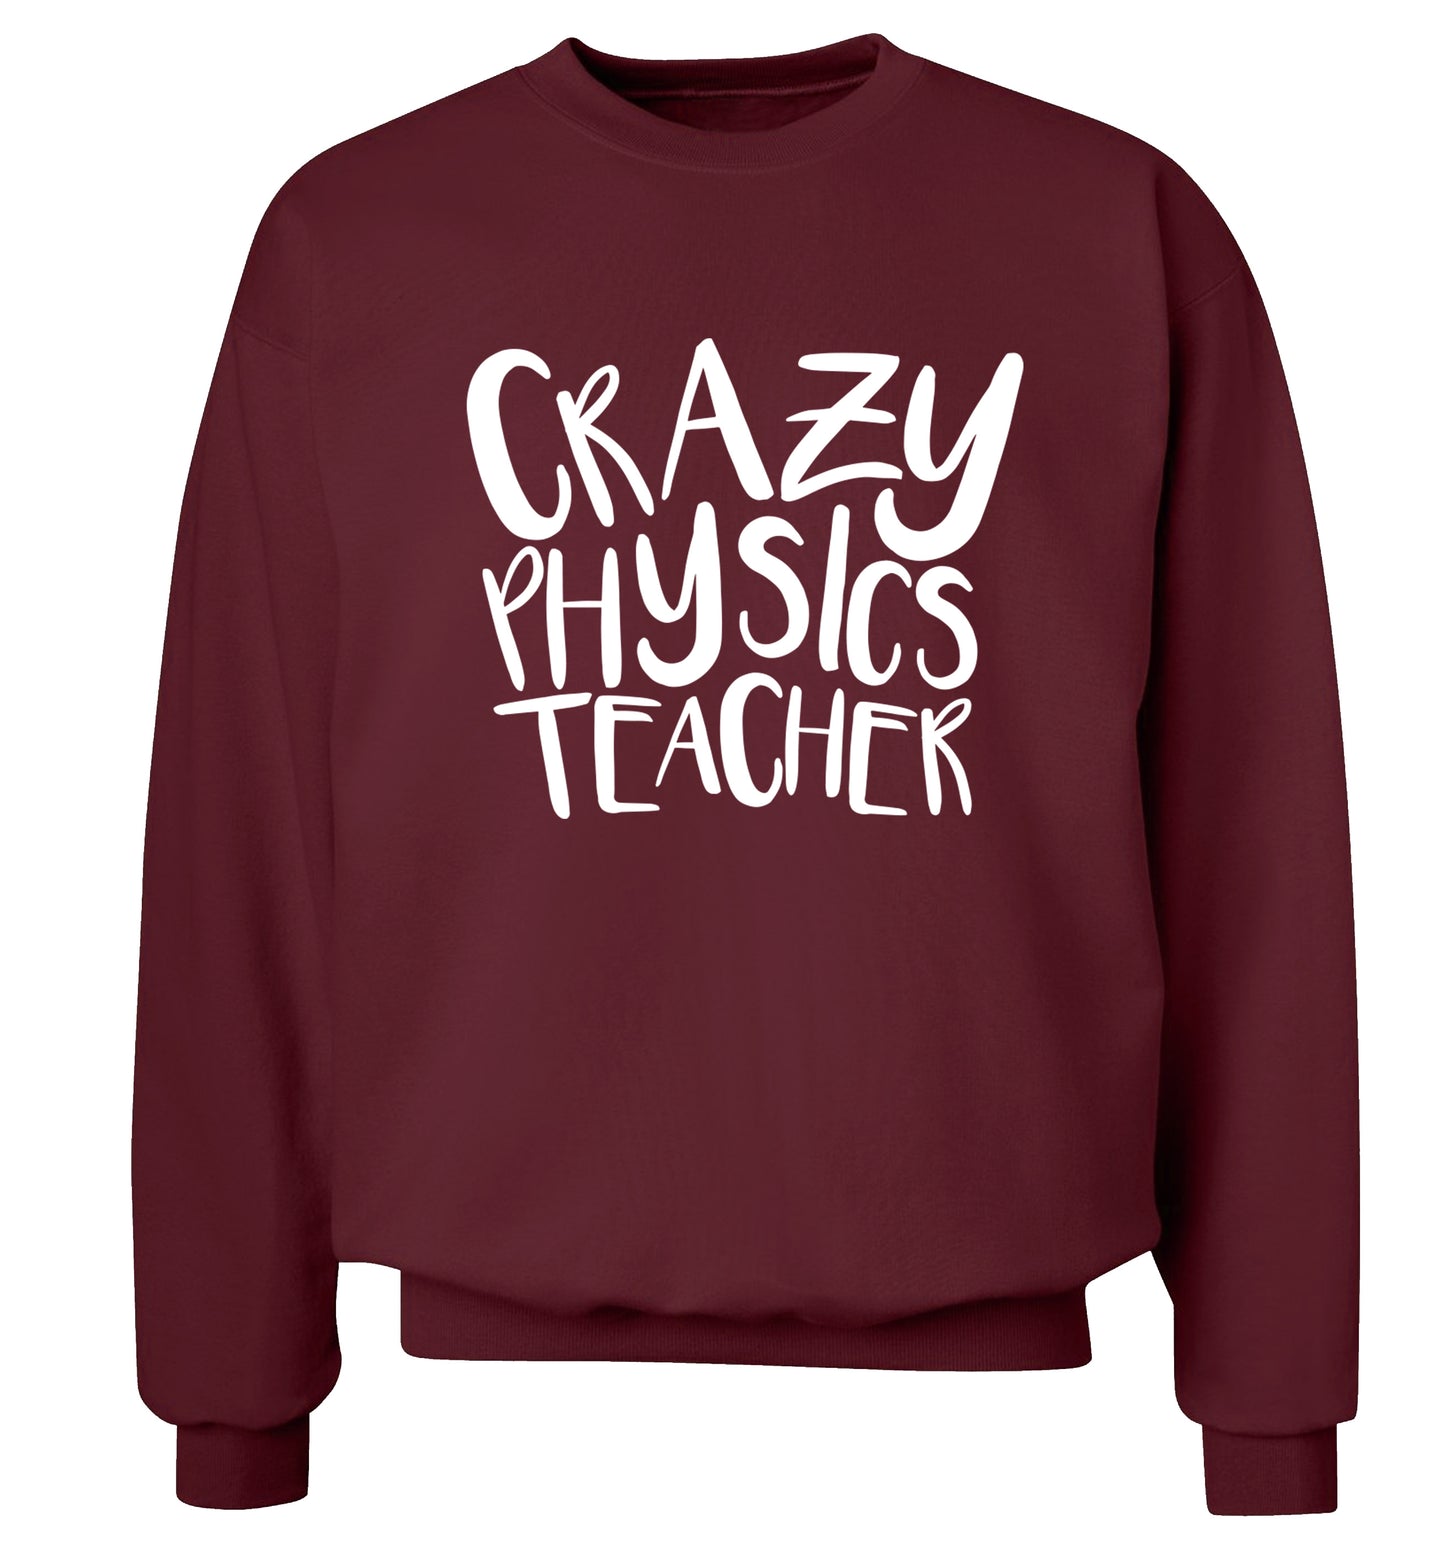 Crazy physics teacher Adult's unisex maroon Sweater 2XL